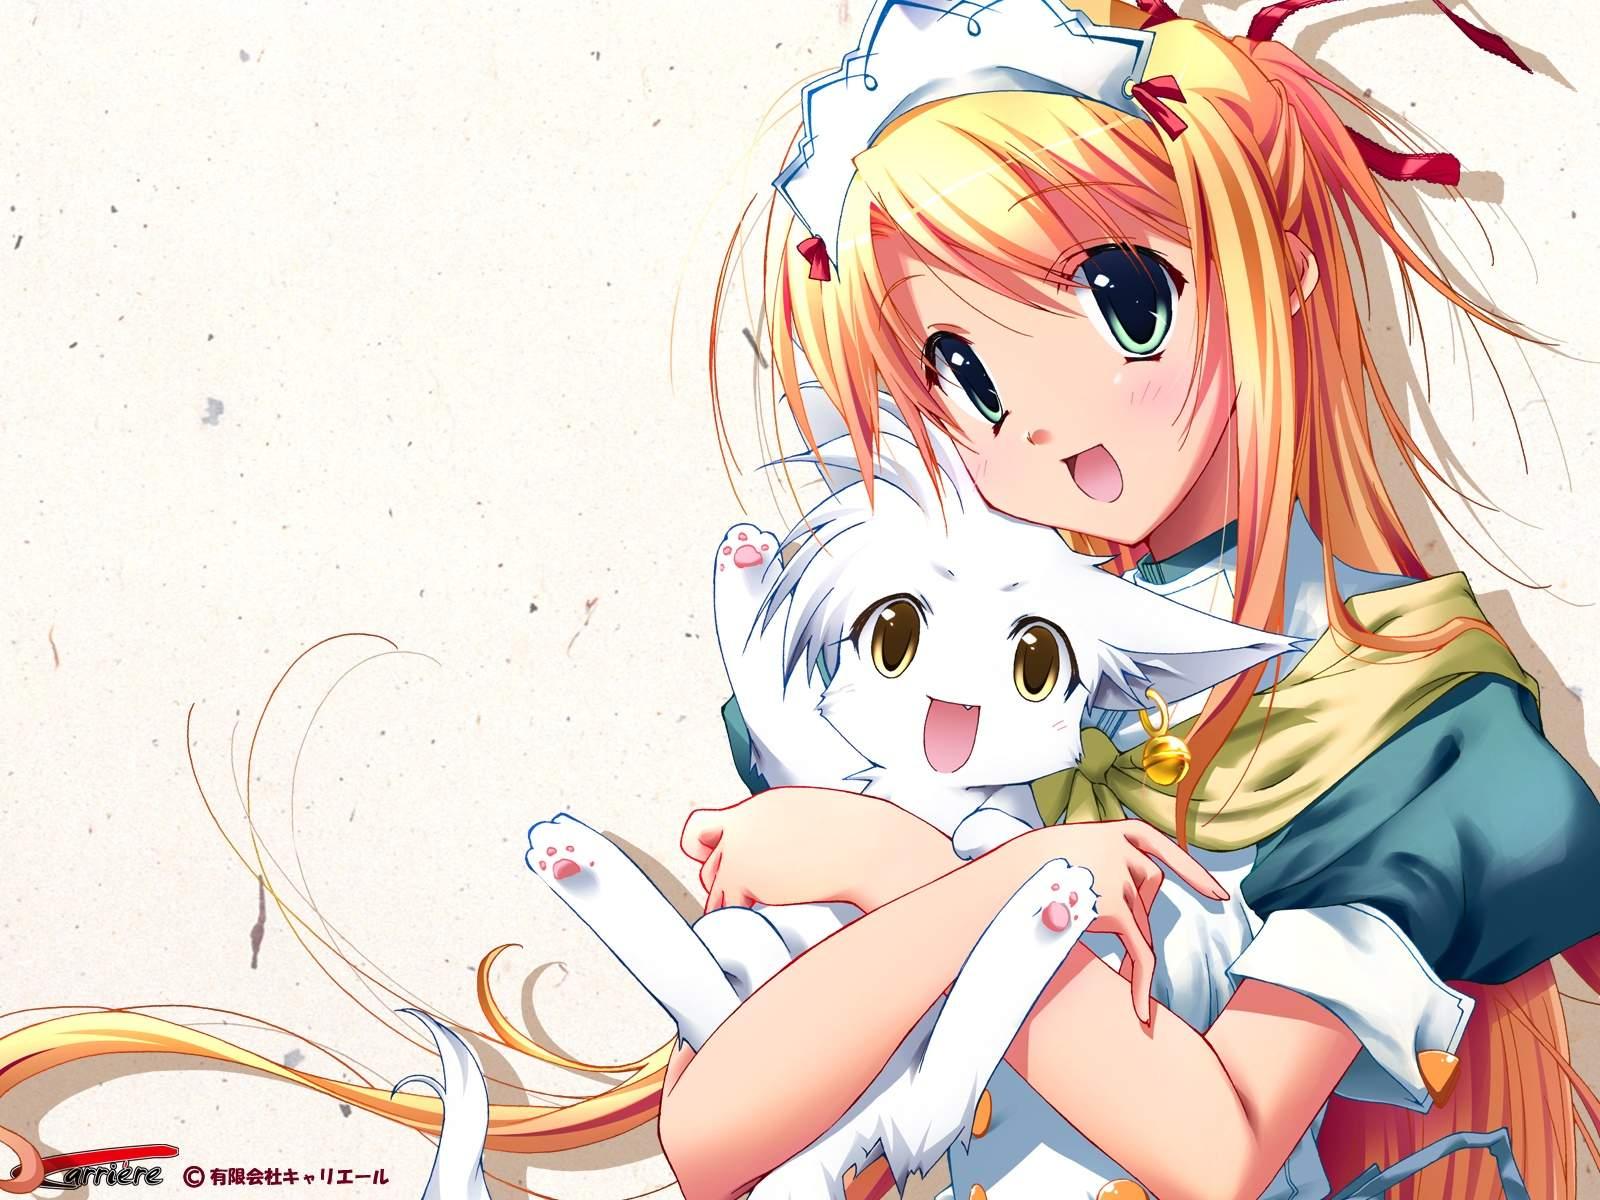 1600 x 1200 · jpeg - Cute Anime Wallpapers | Free Download Wallpaper | DaWallpaperz